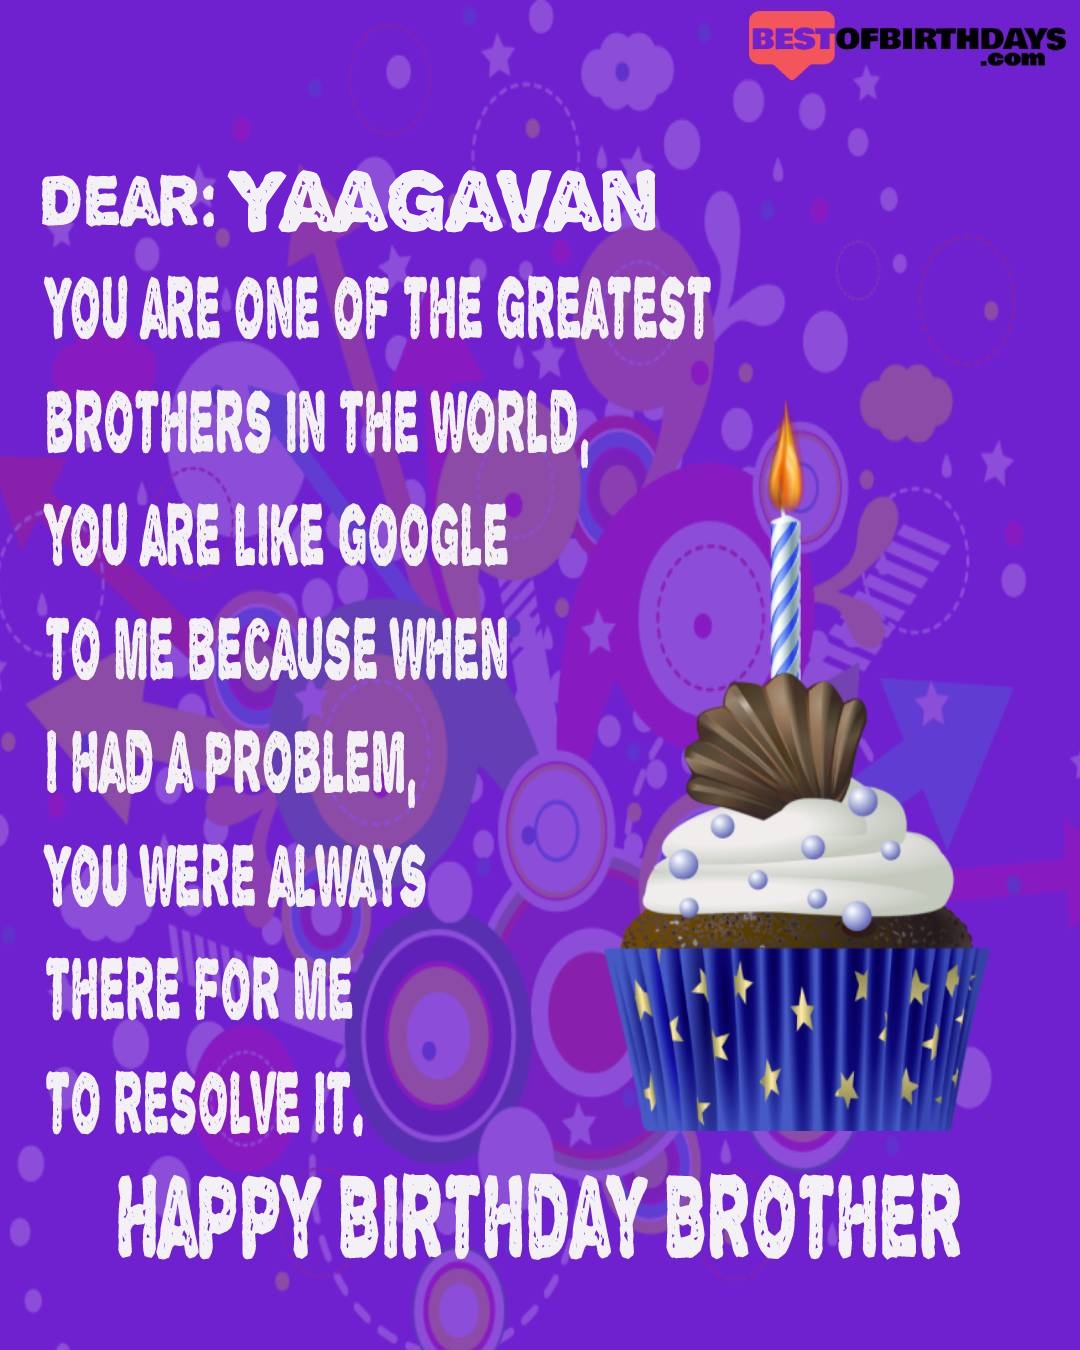 Happy birthday yaagavan bhai brother bro